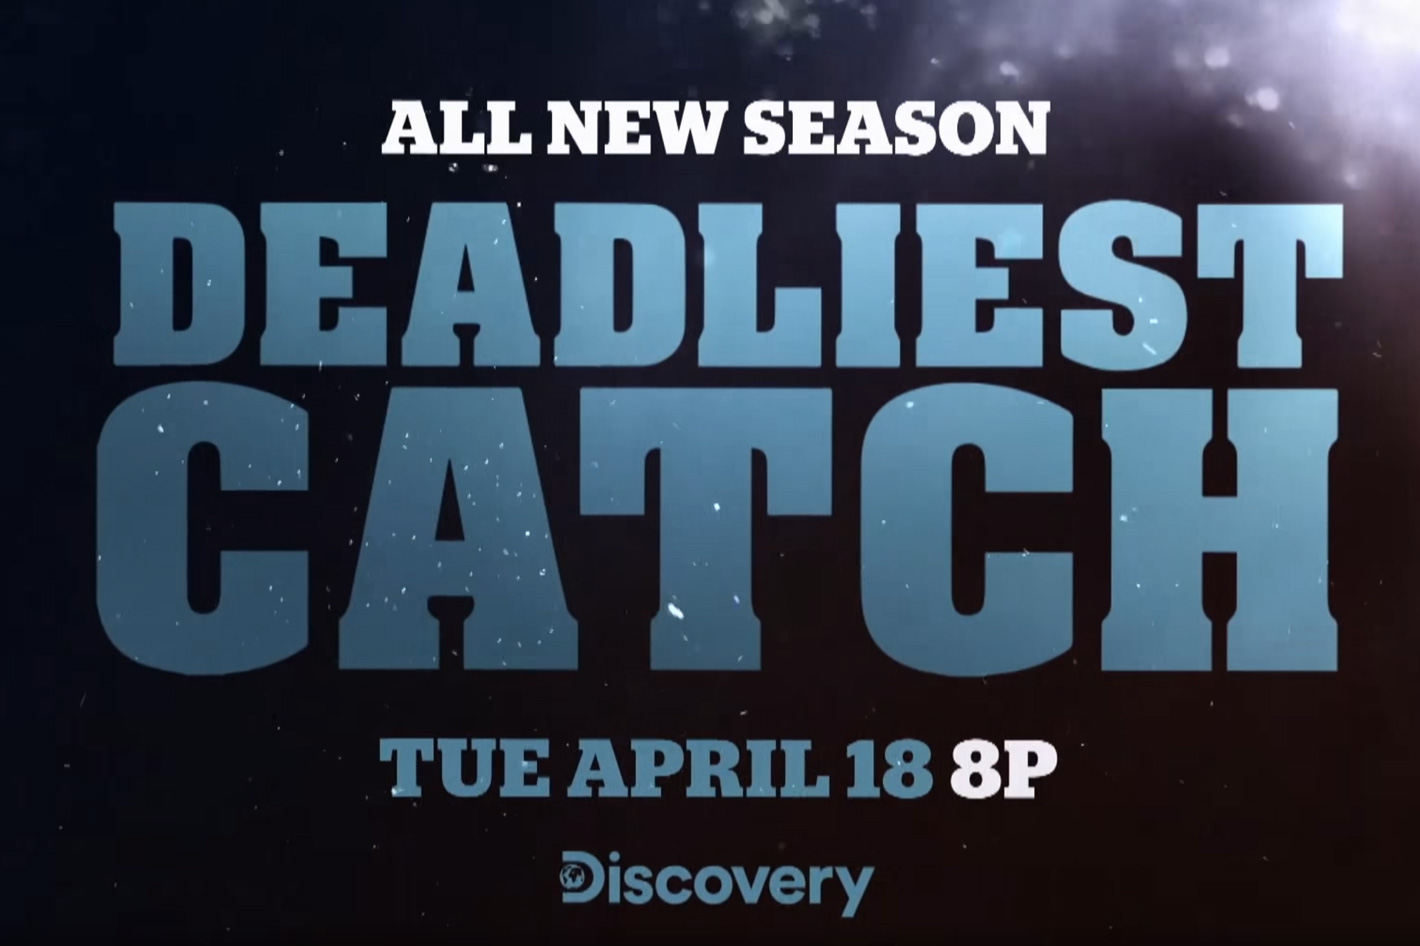 Deadliest Catch the popular show returns for a new season National